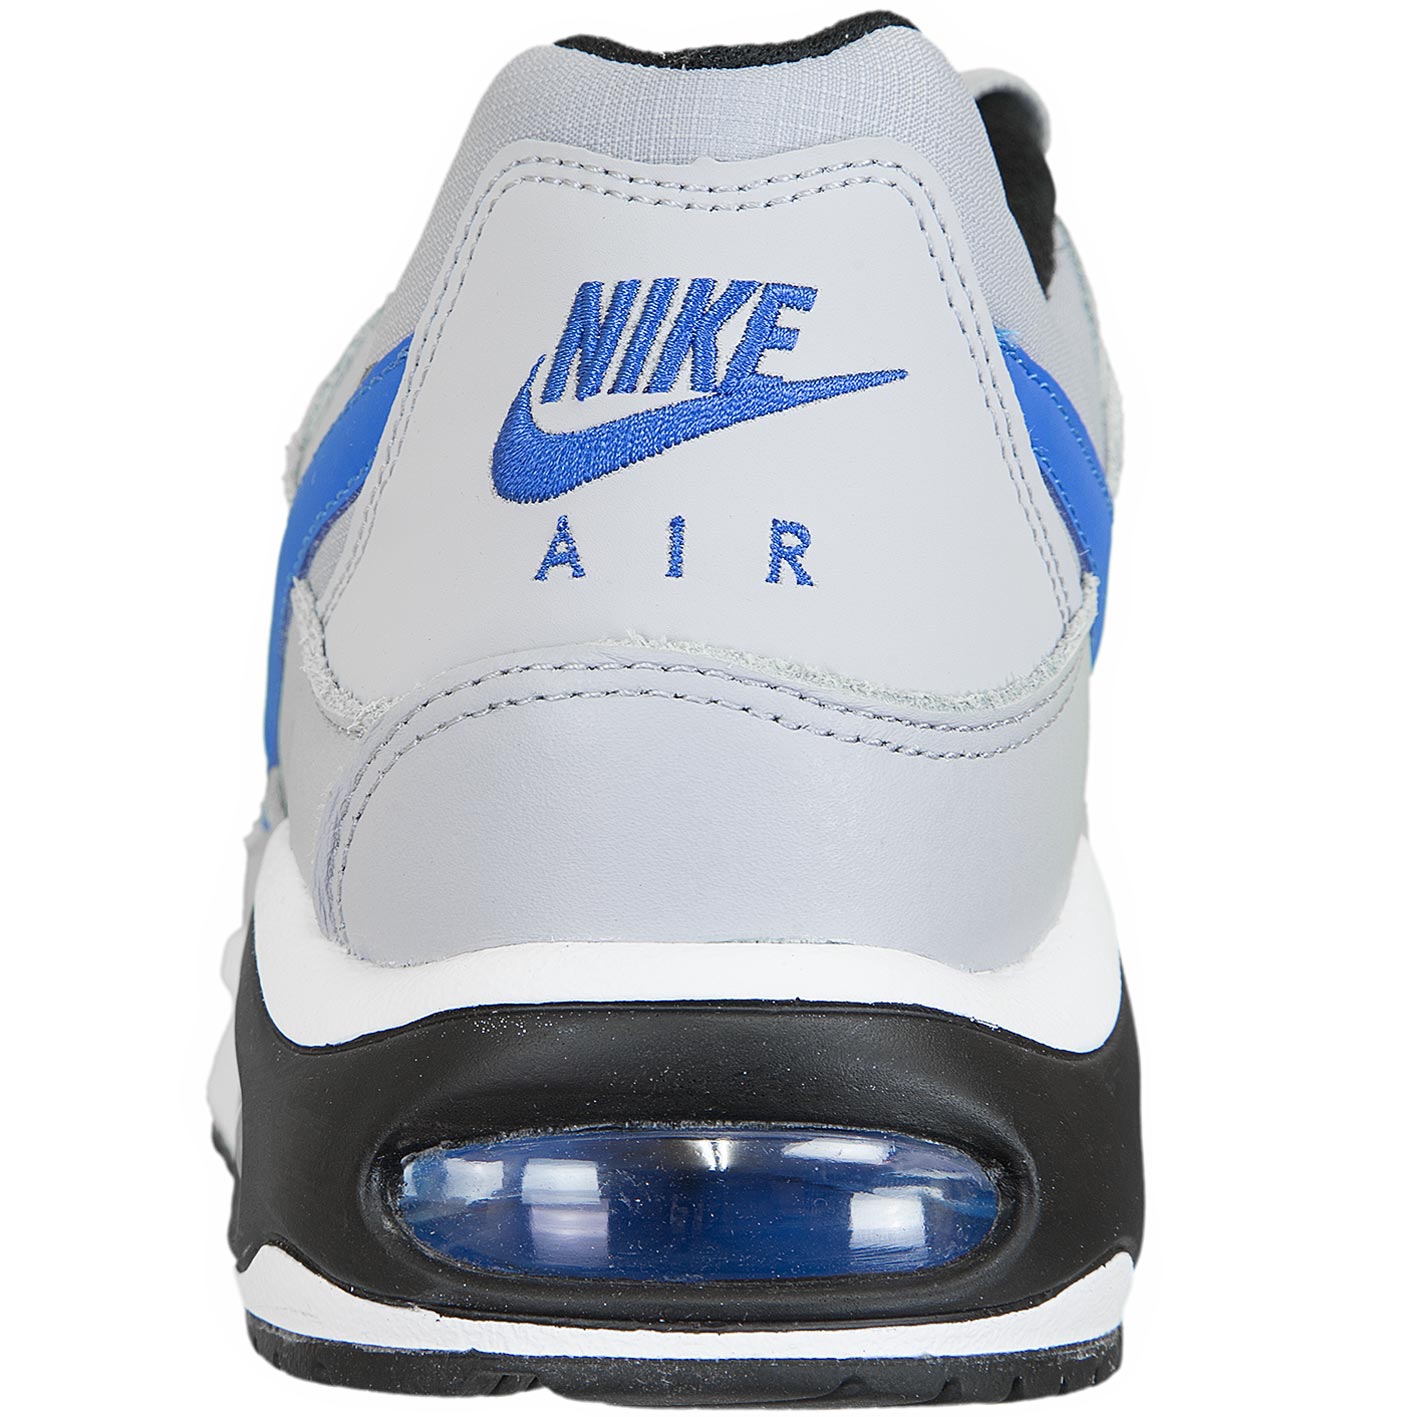 ☆ Nike Sneaker Air Max Command grau/blau - hier bestellen!